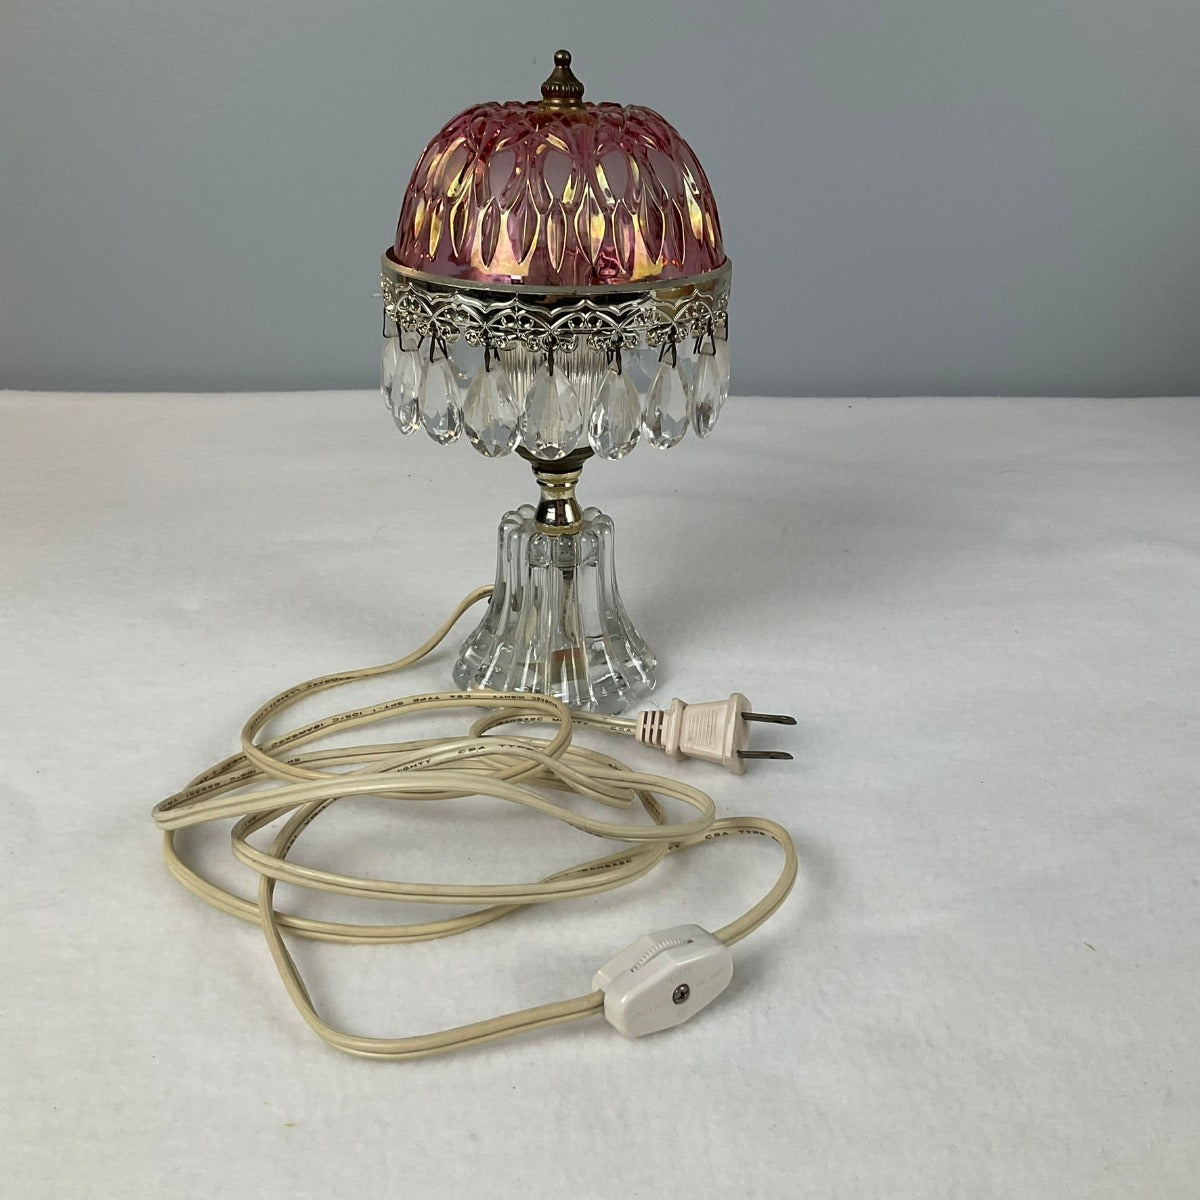 Michelotti Boudoir Lamp - Vintage Single Tier Pink Crystal Glass - Electrical Cord